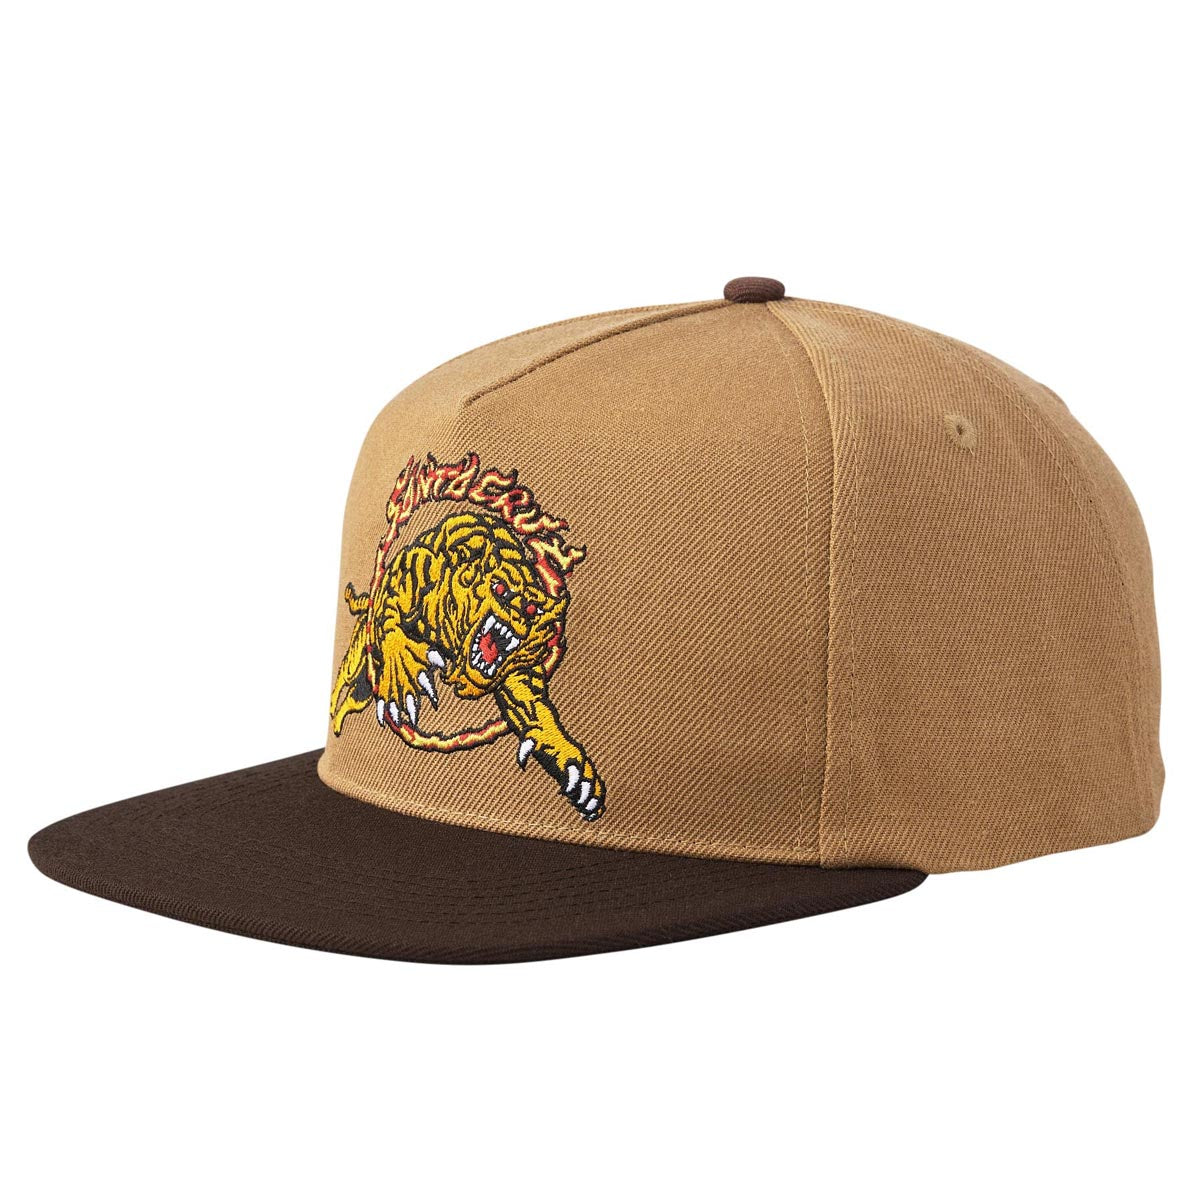 Santa Cruz Salba Tiger Snapback Hat - Khaki/Brown image 1